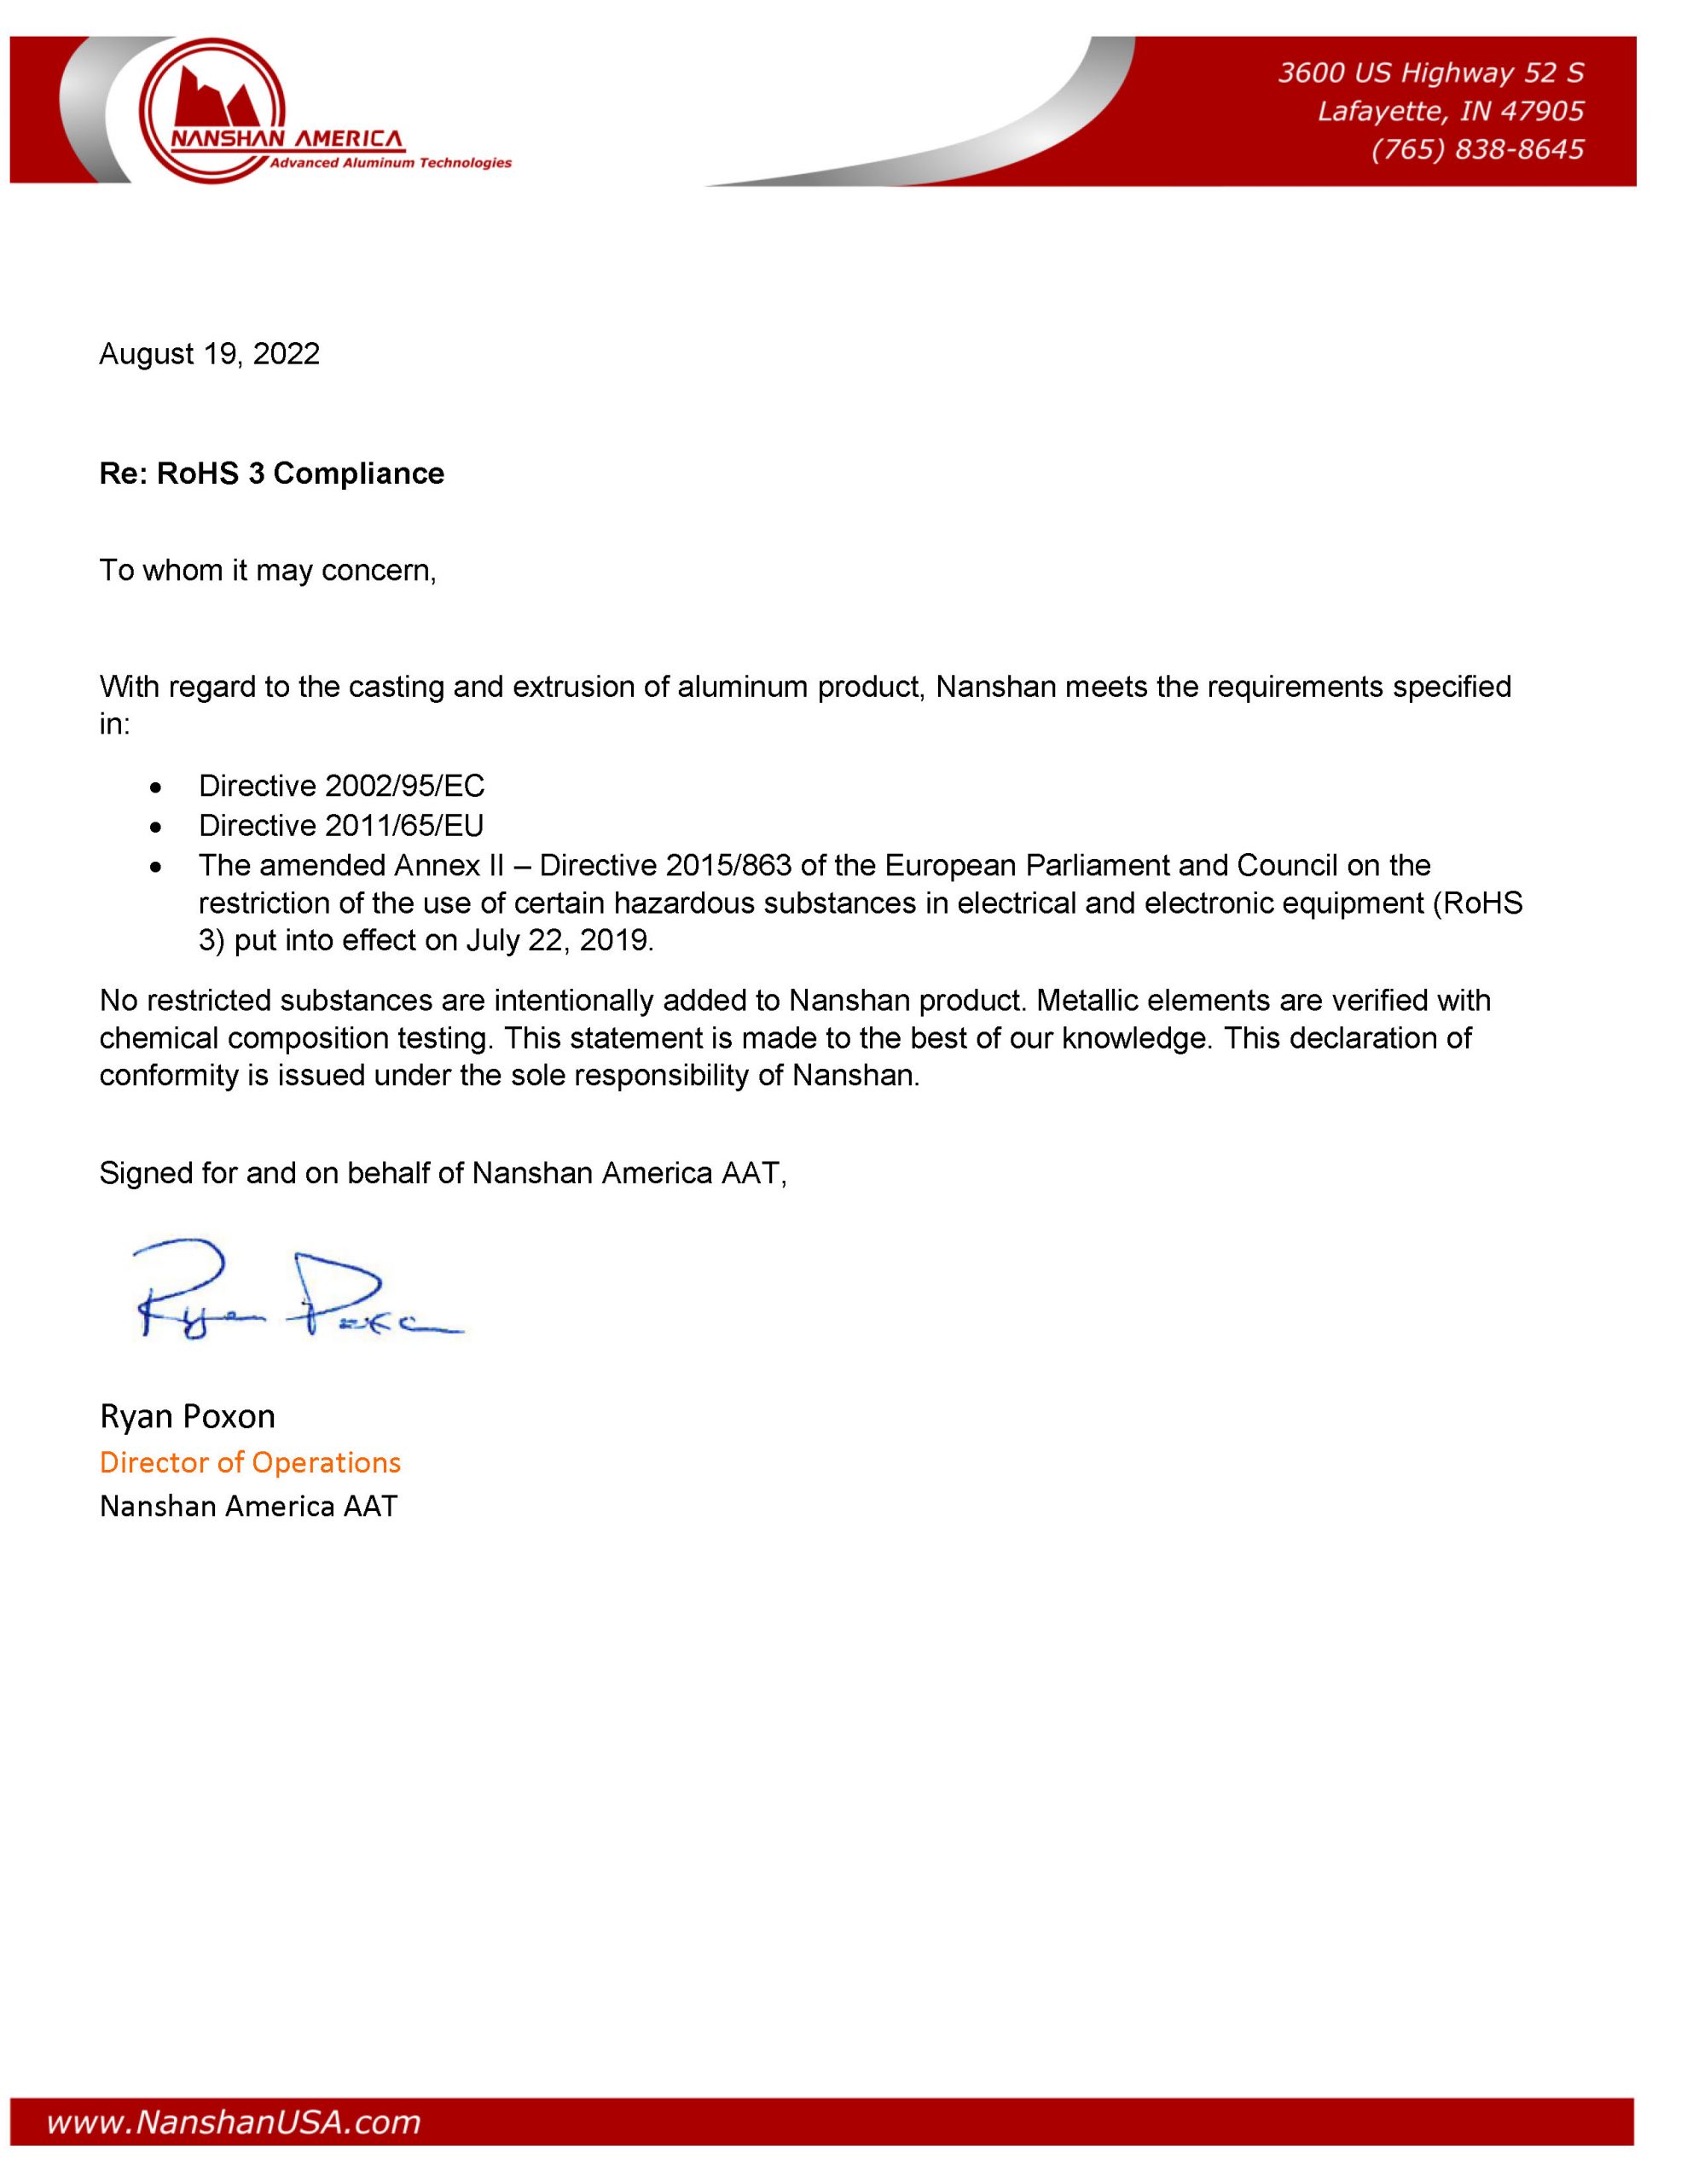 August 2022 RoHS Compliance Statement